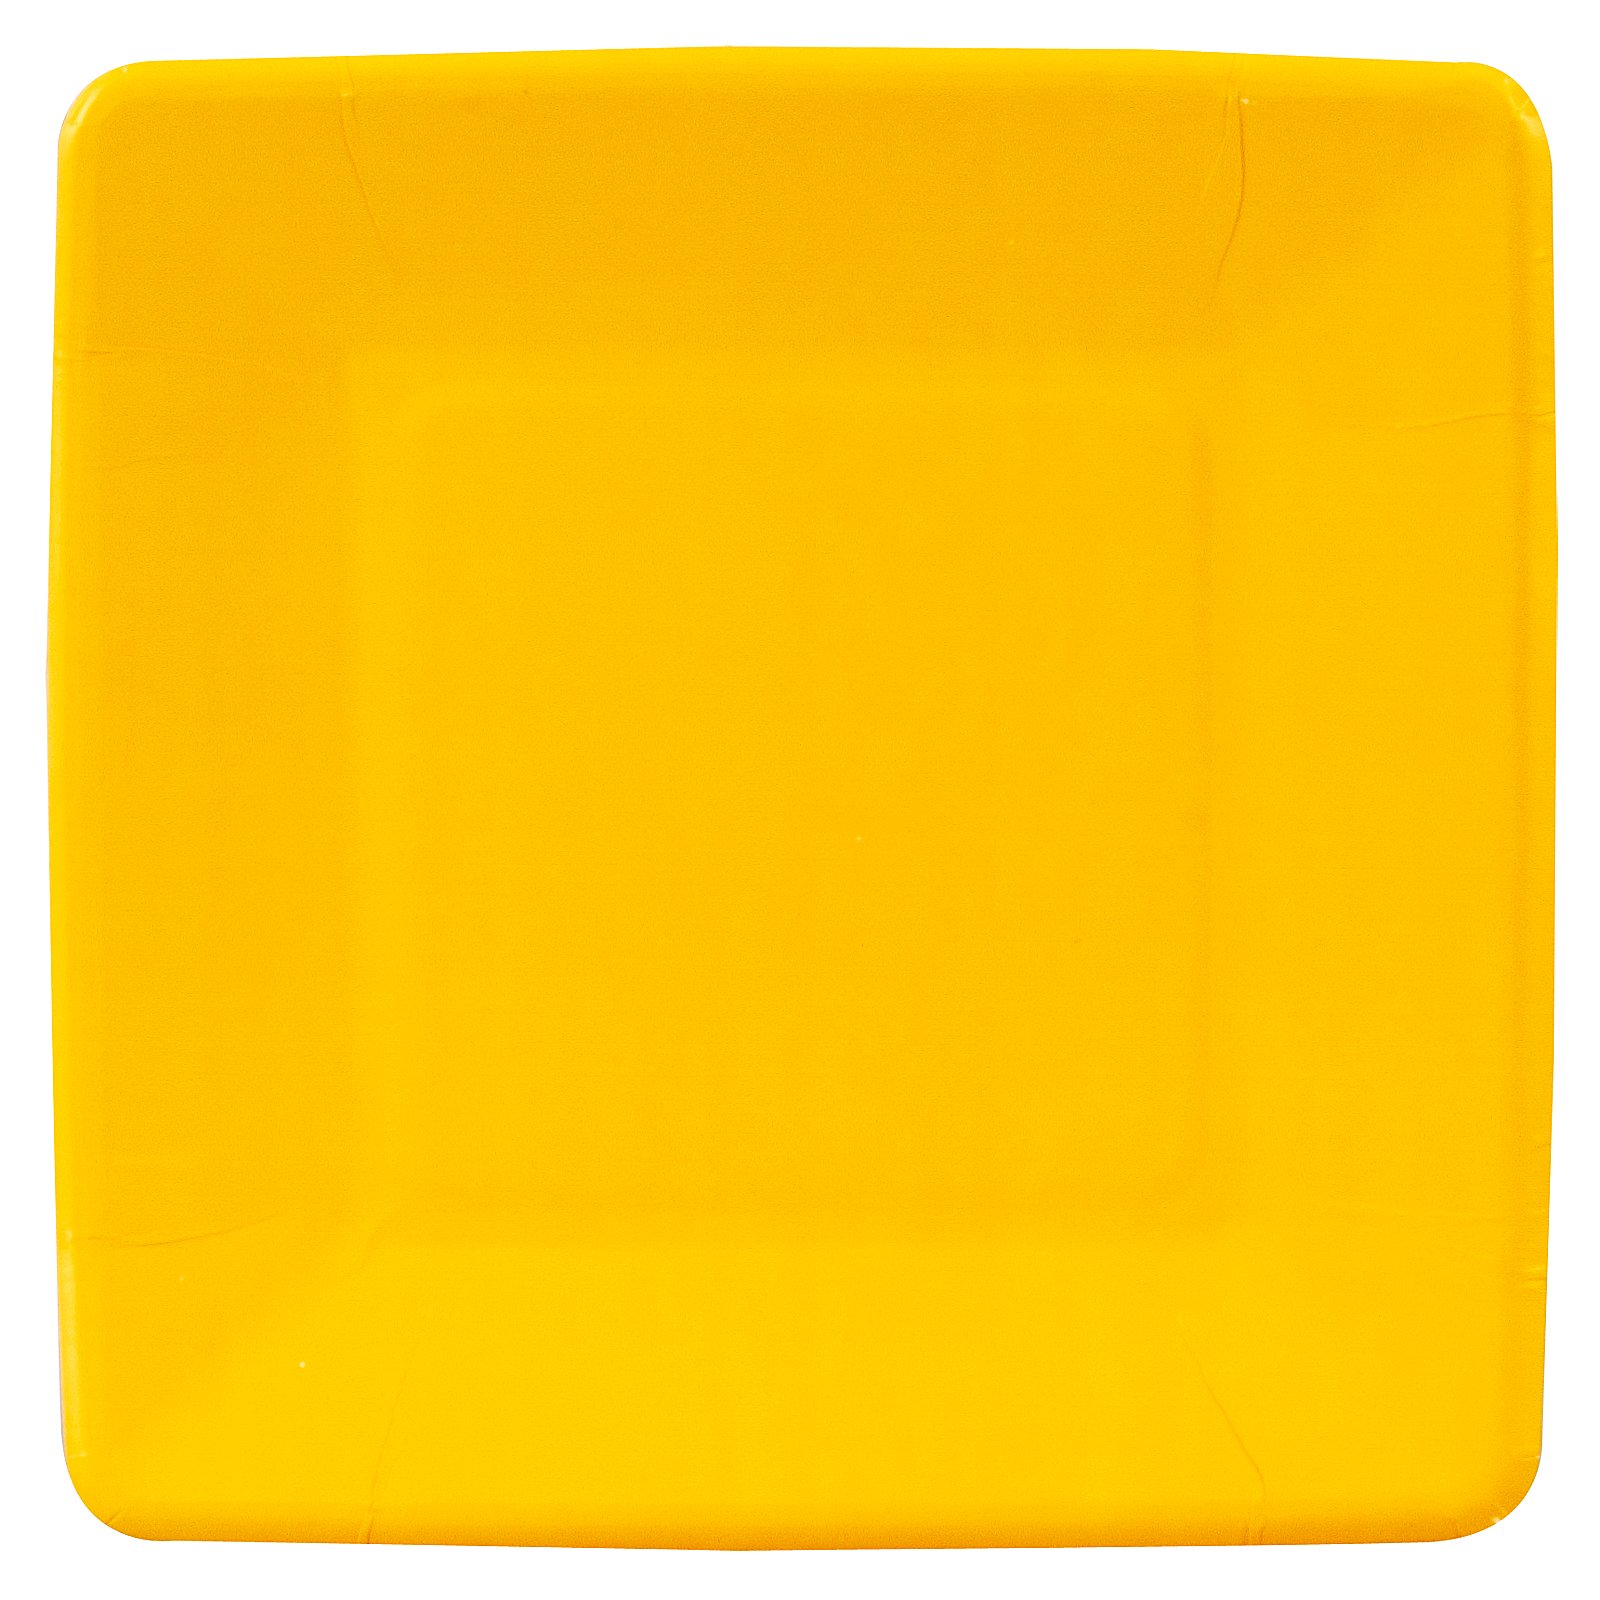 School Bus Yellow (Yellow) Square Dessert Plates (18 count)